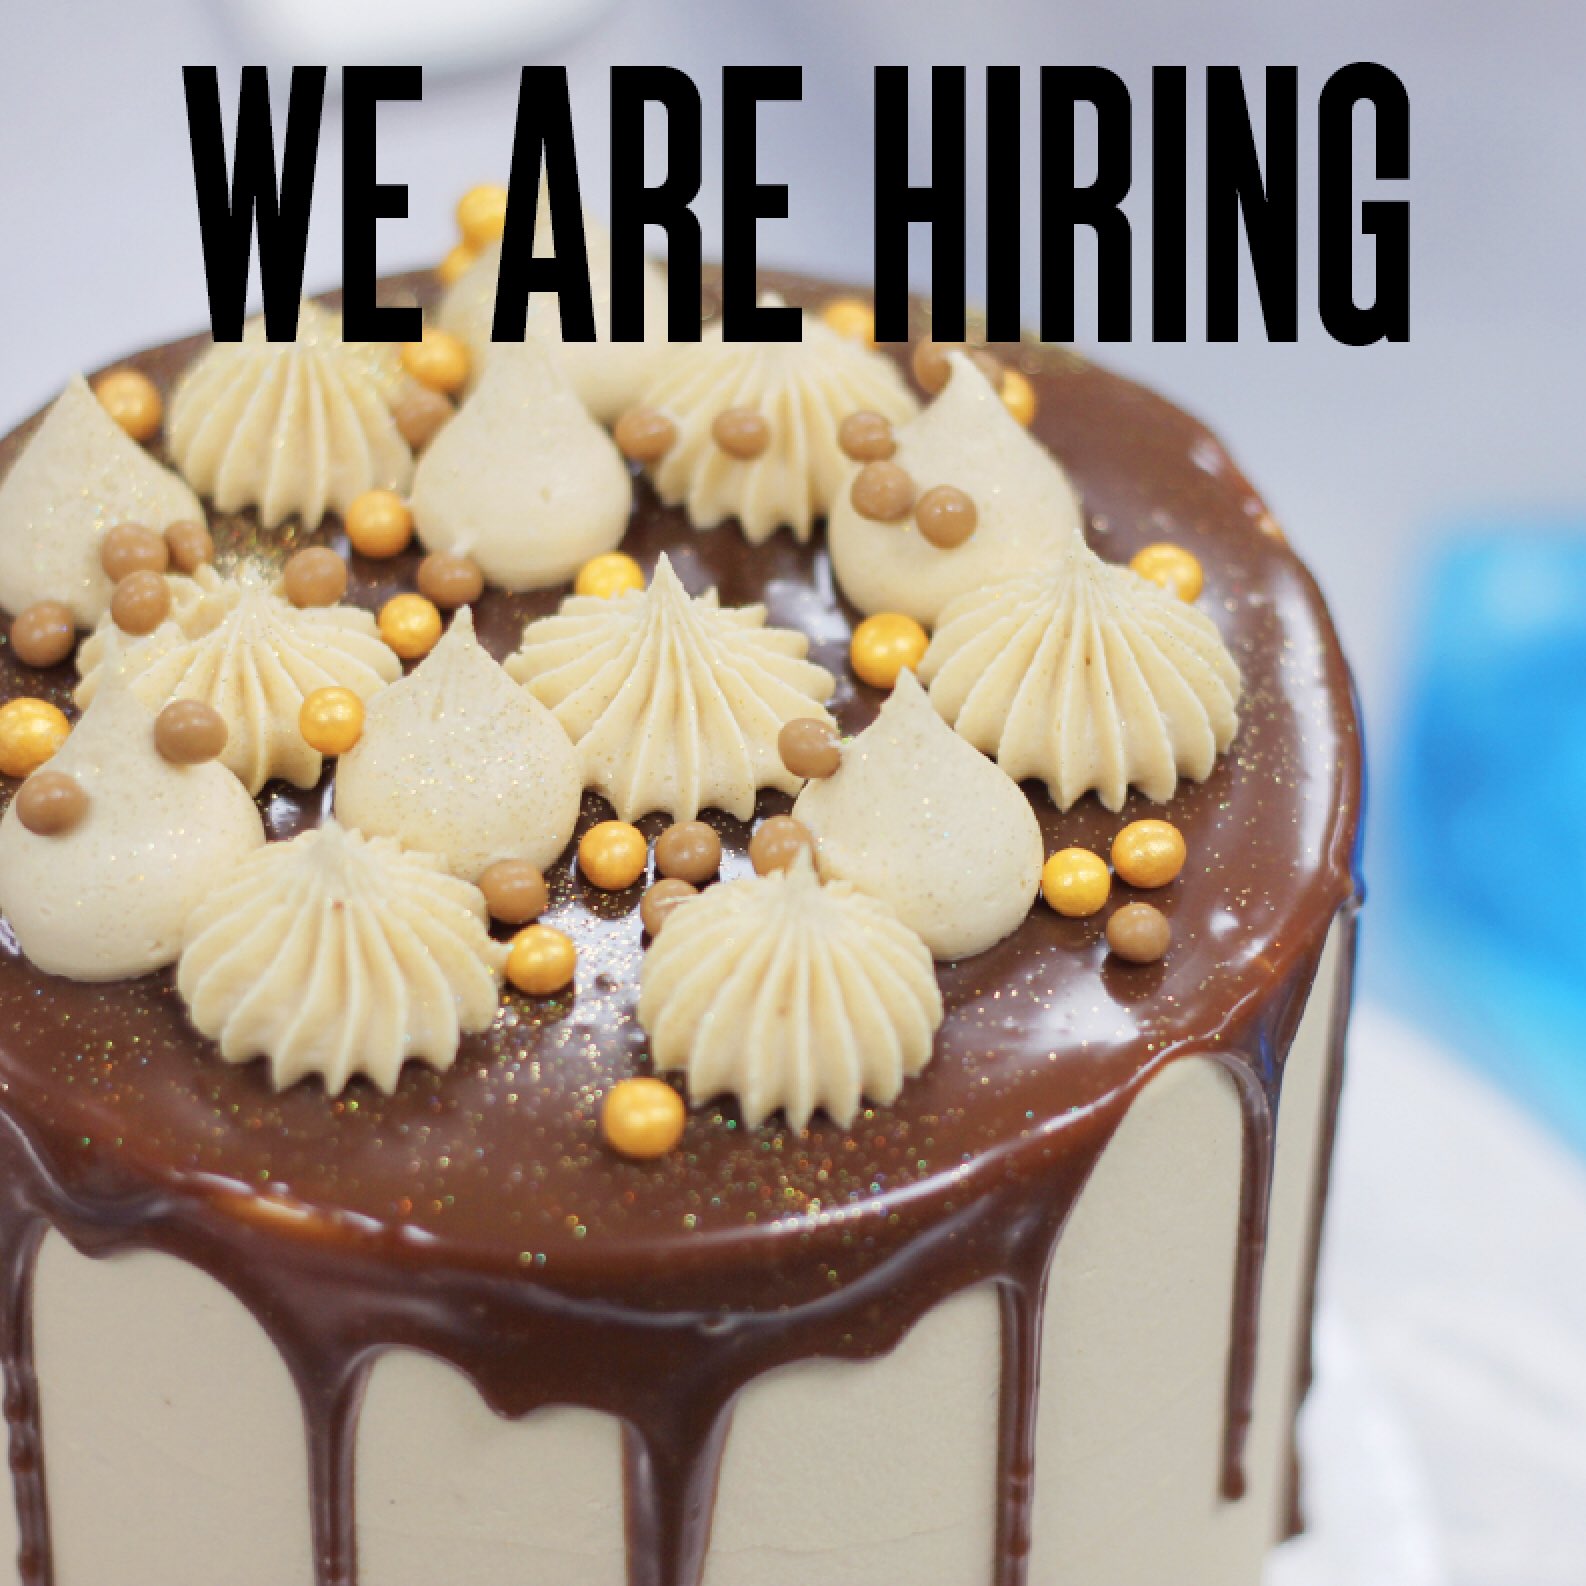 Details more than 53 cake decorator hiring super hot - seven.edu.vn